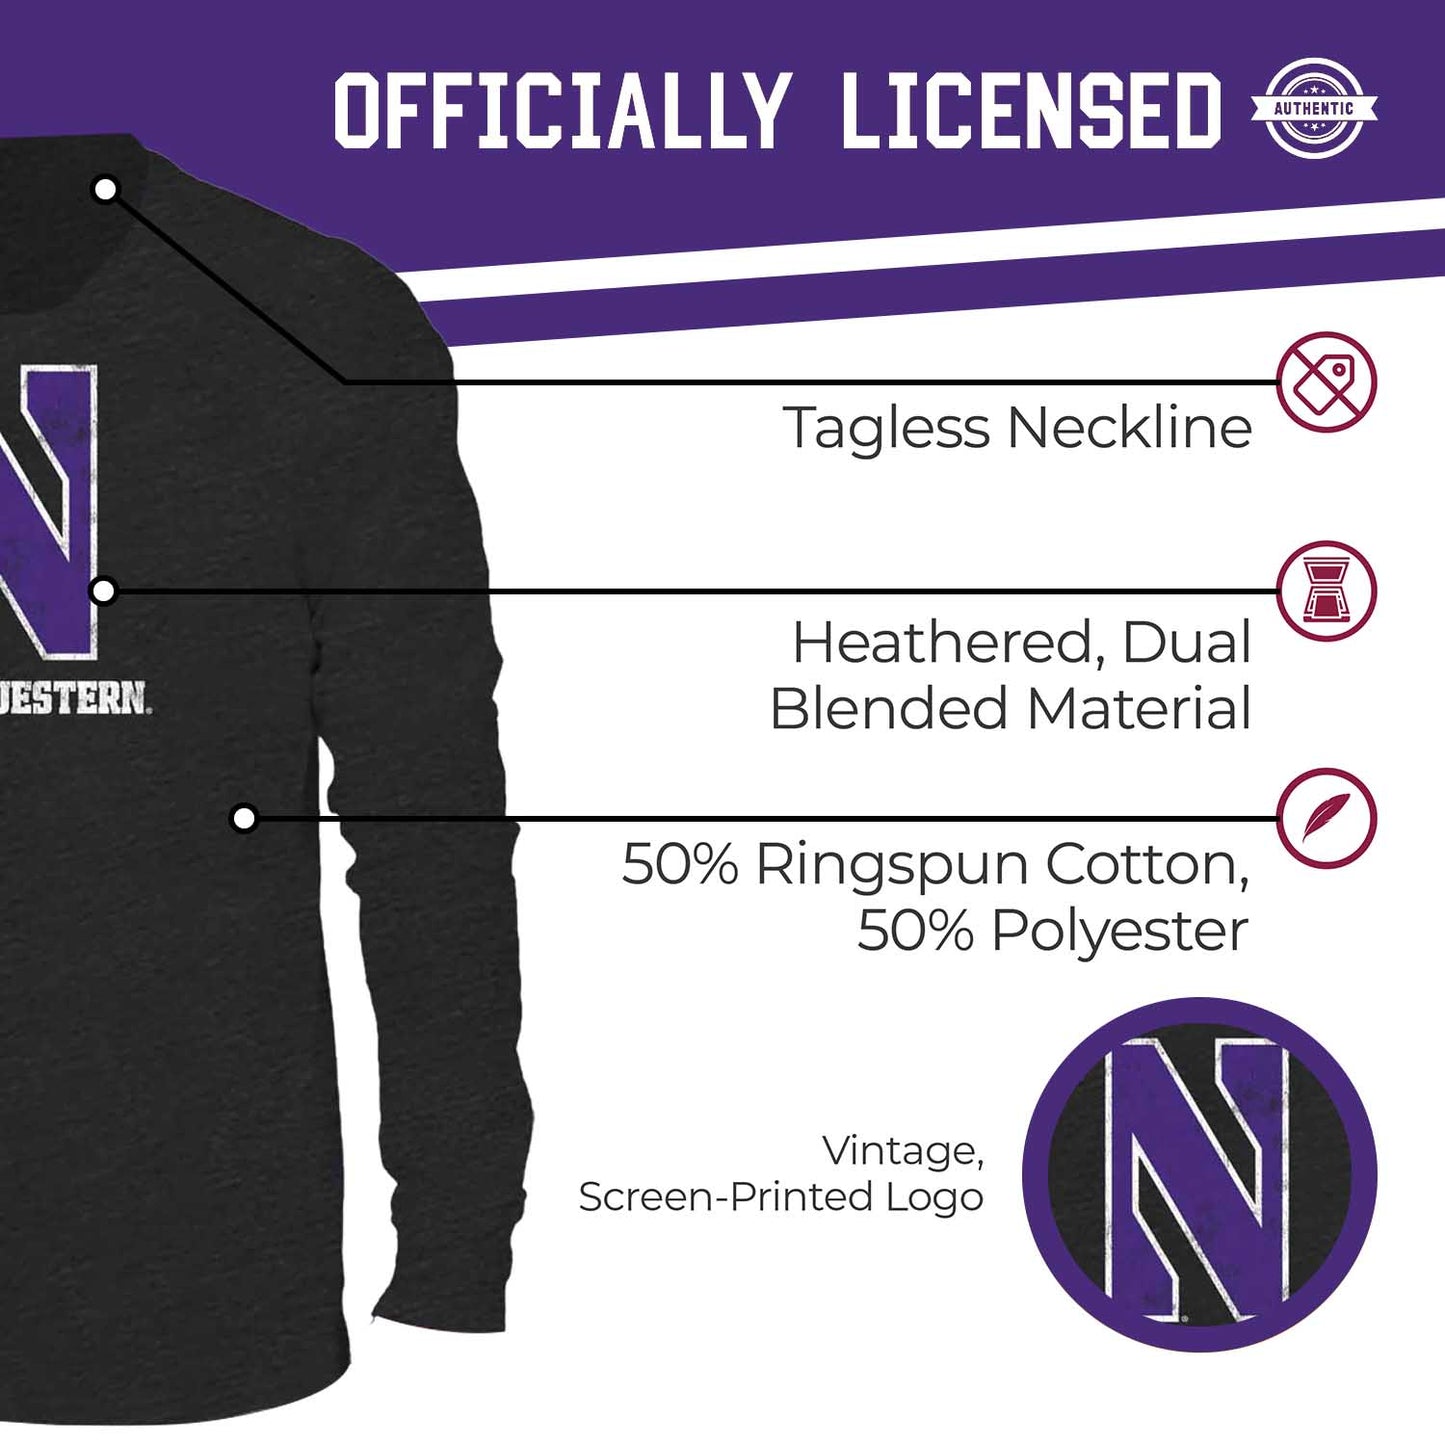 Northwestern Wildcats NCAA MVP Adult Long-Sleeve Shirt - Black